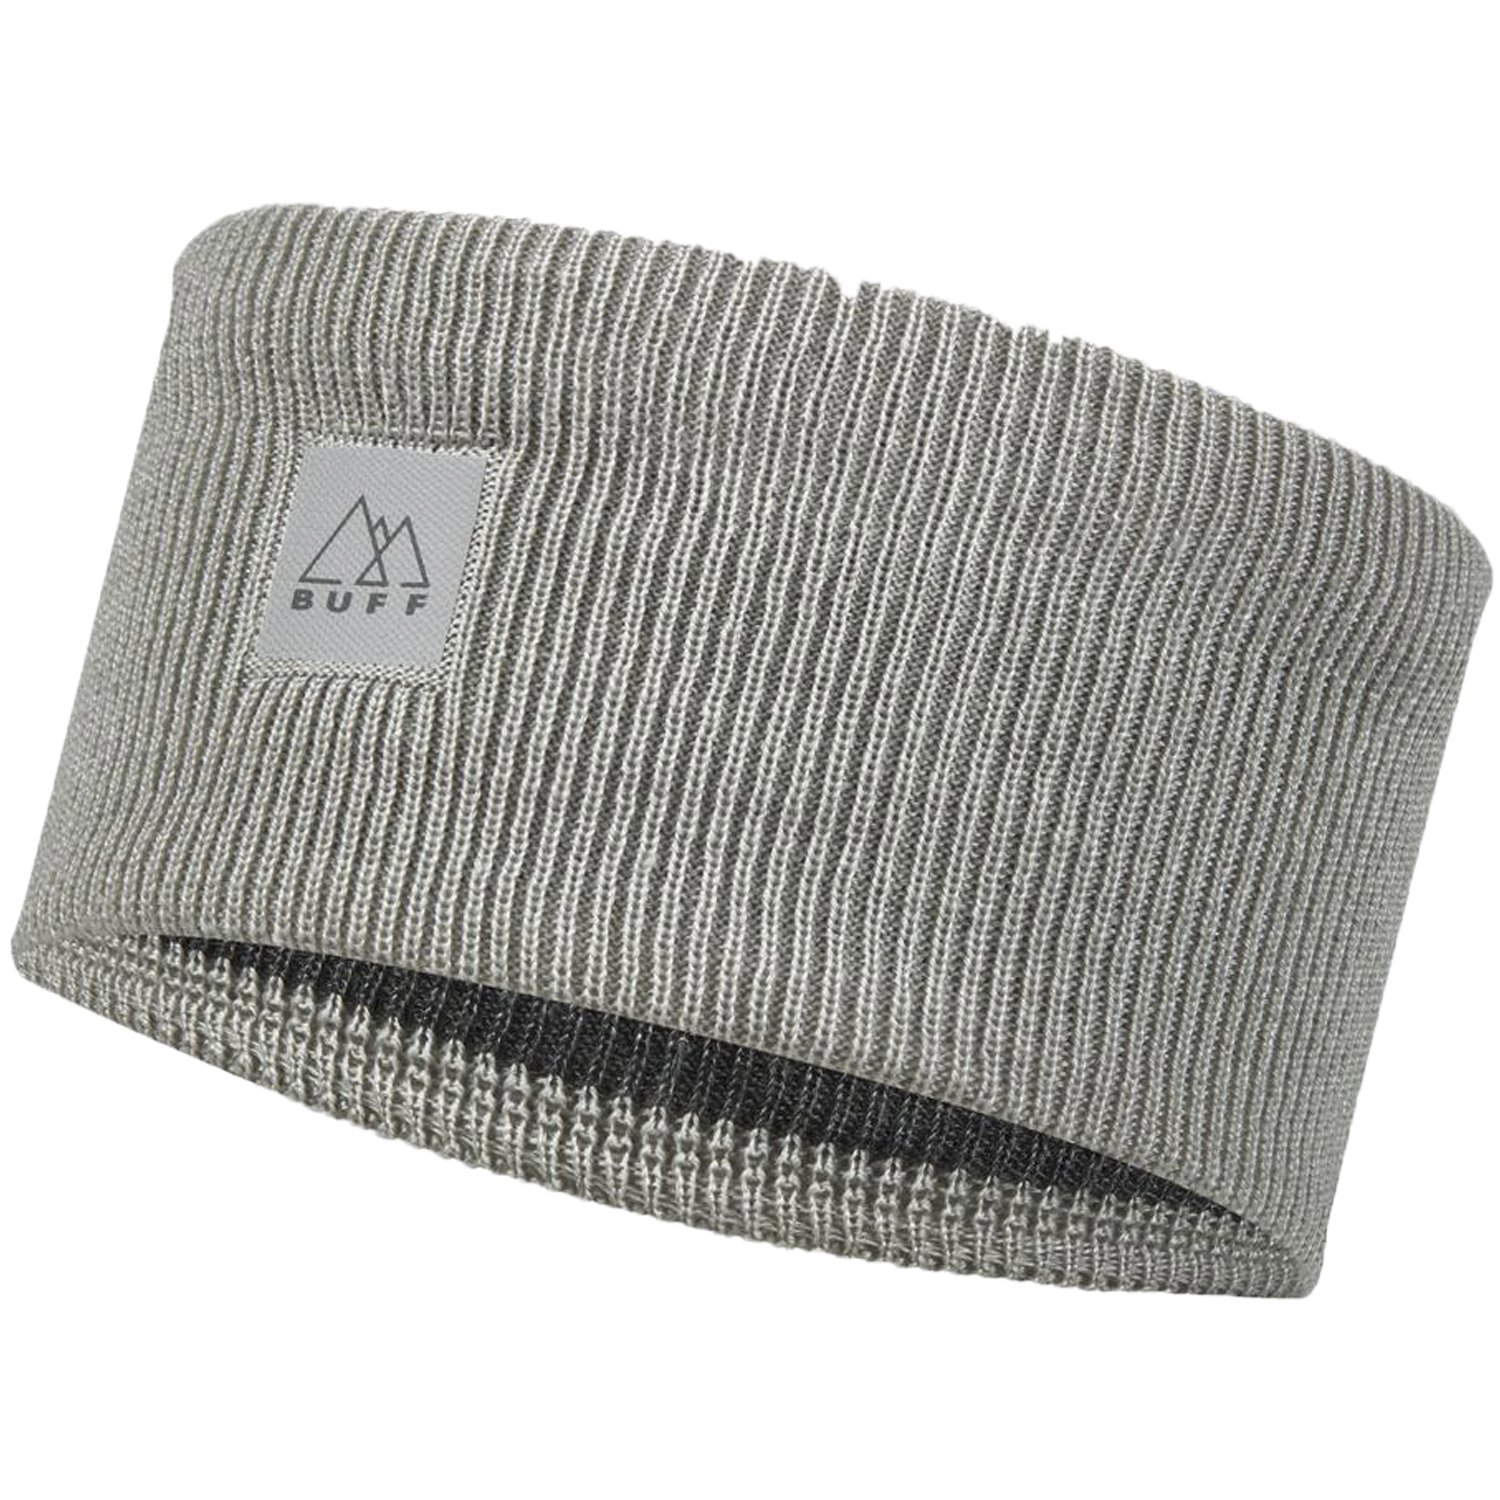 Повязка Buff Crossknit Headband Solid Light Grey, 126484.933.10.00 шапка buff crossknit hat sold lihgt grey us one size 126483 933 10 00